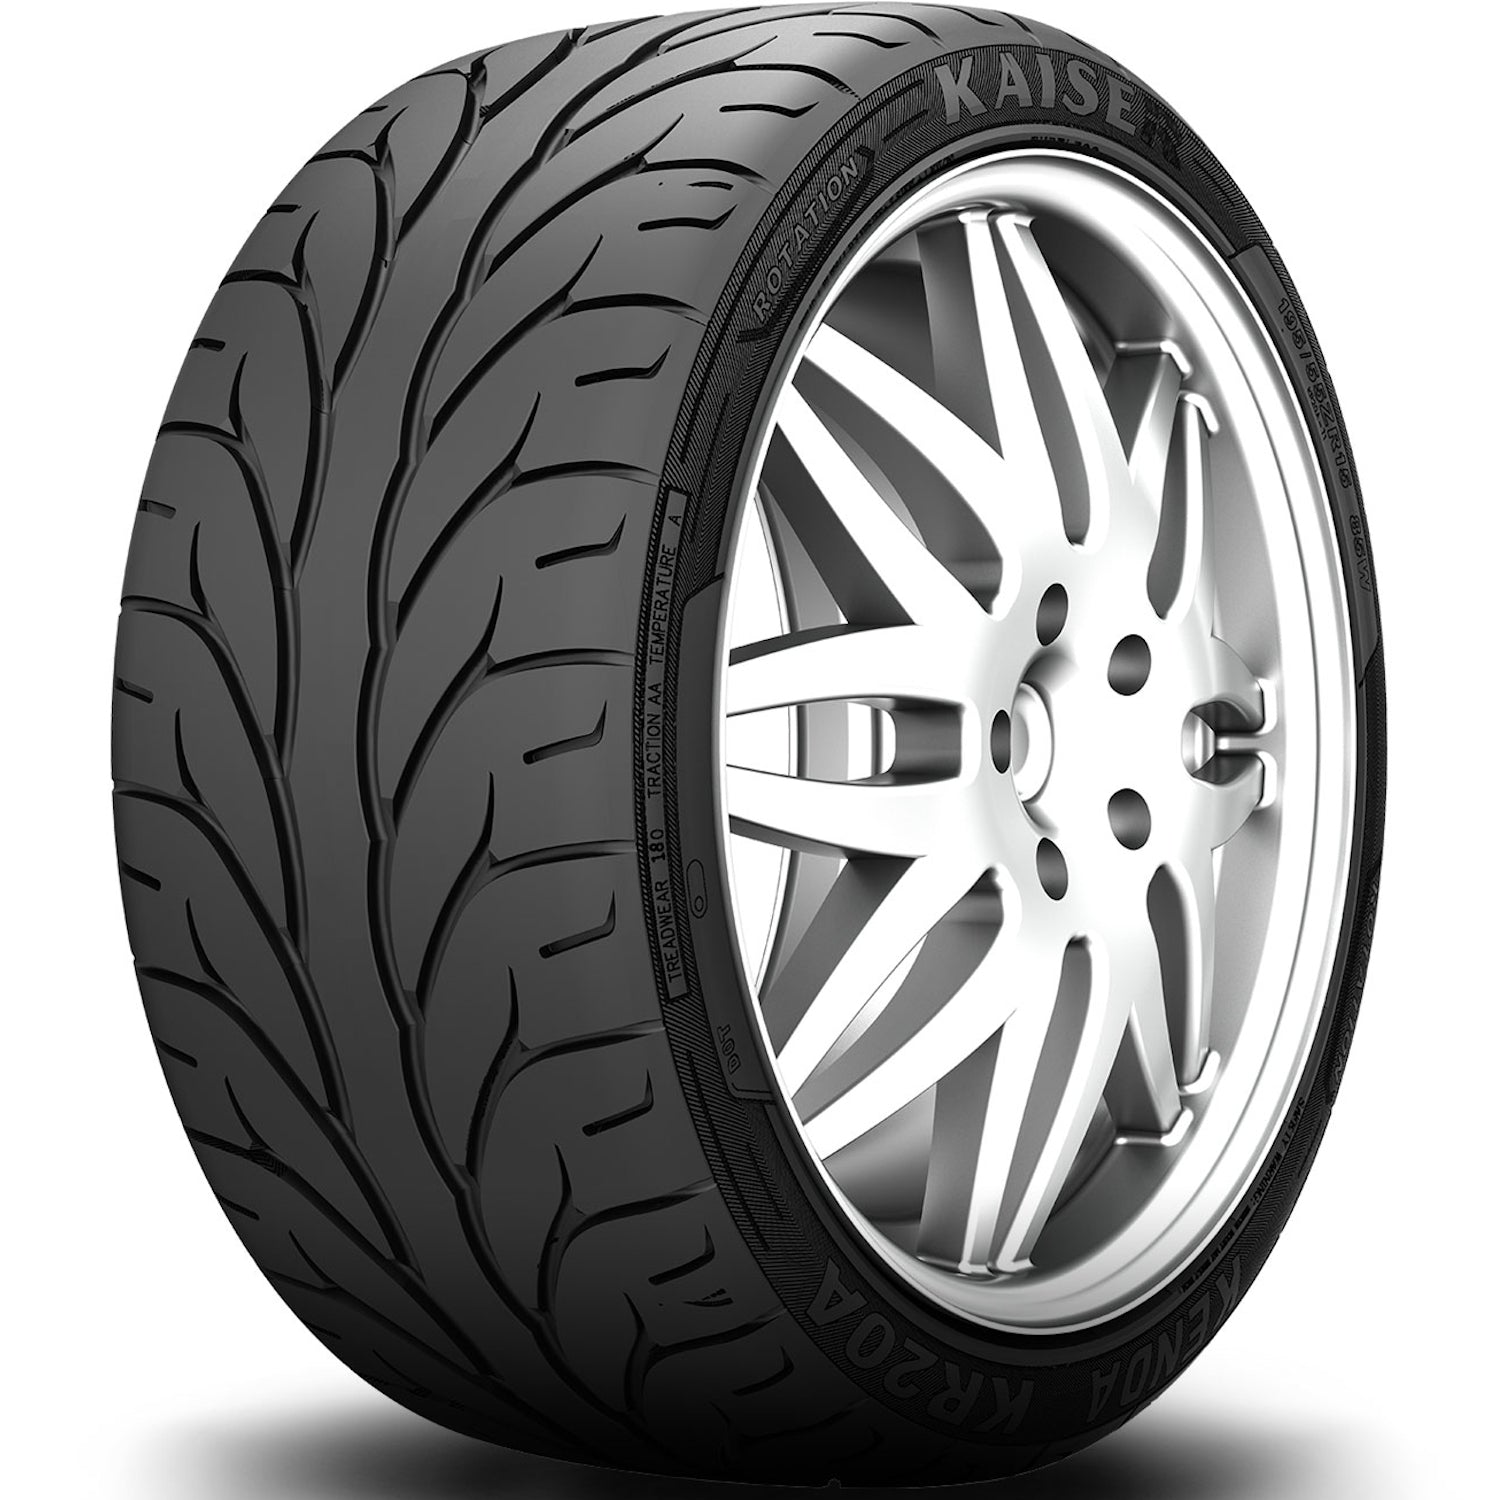 KENDA KAISER KR20A 265/35ZR18 (25.3X10.4R 18) Tires